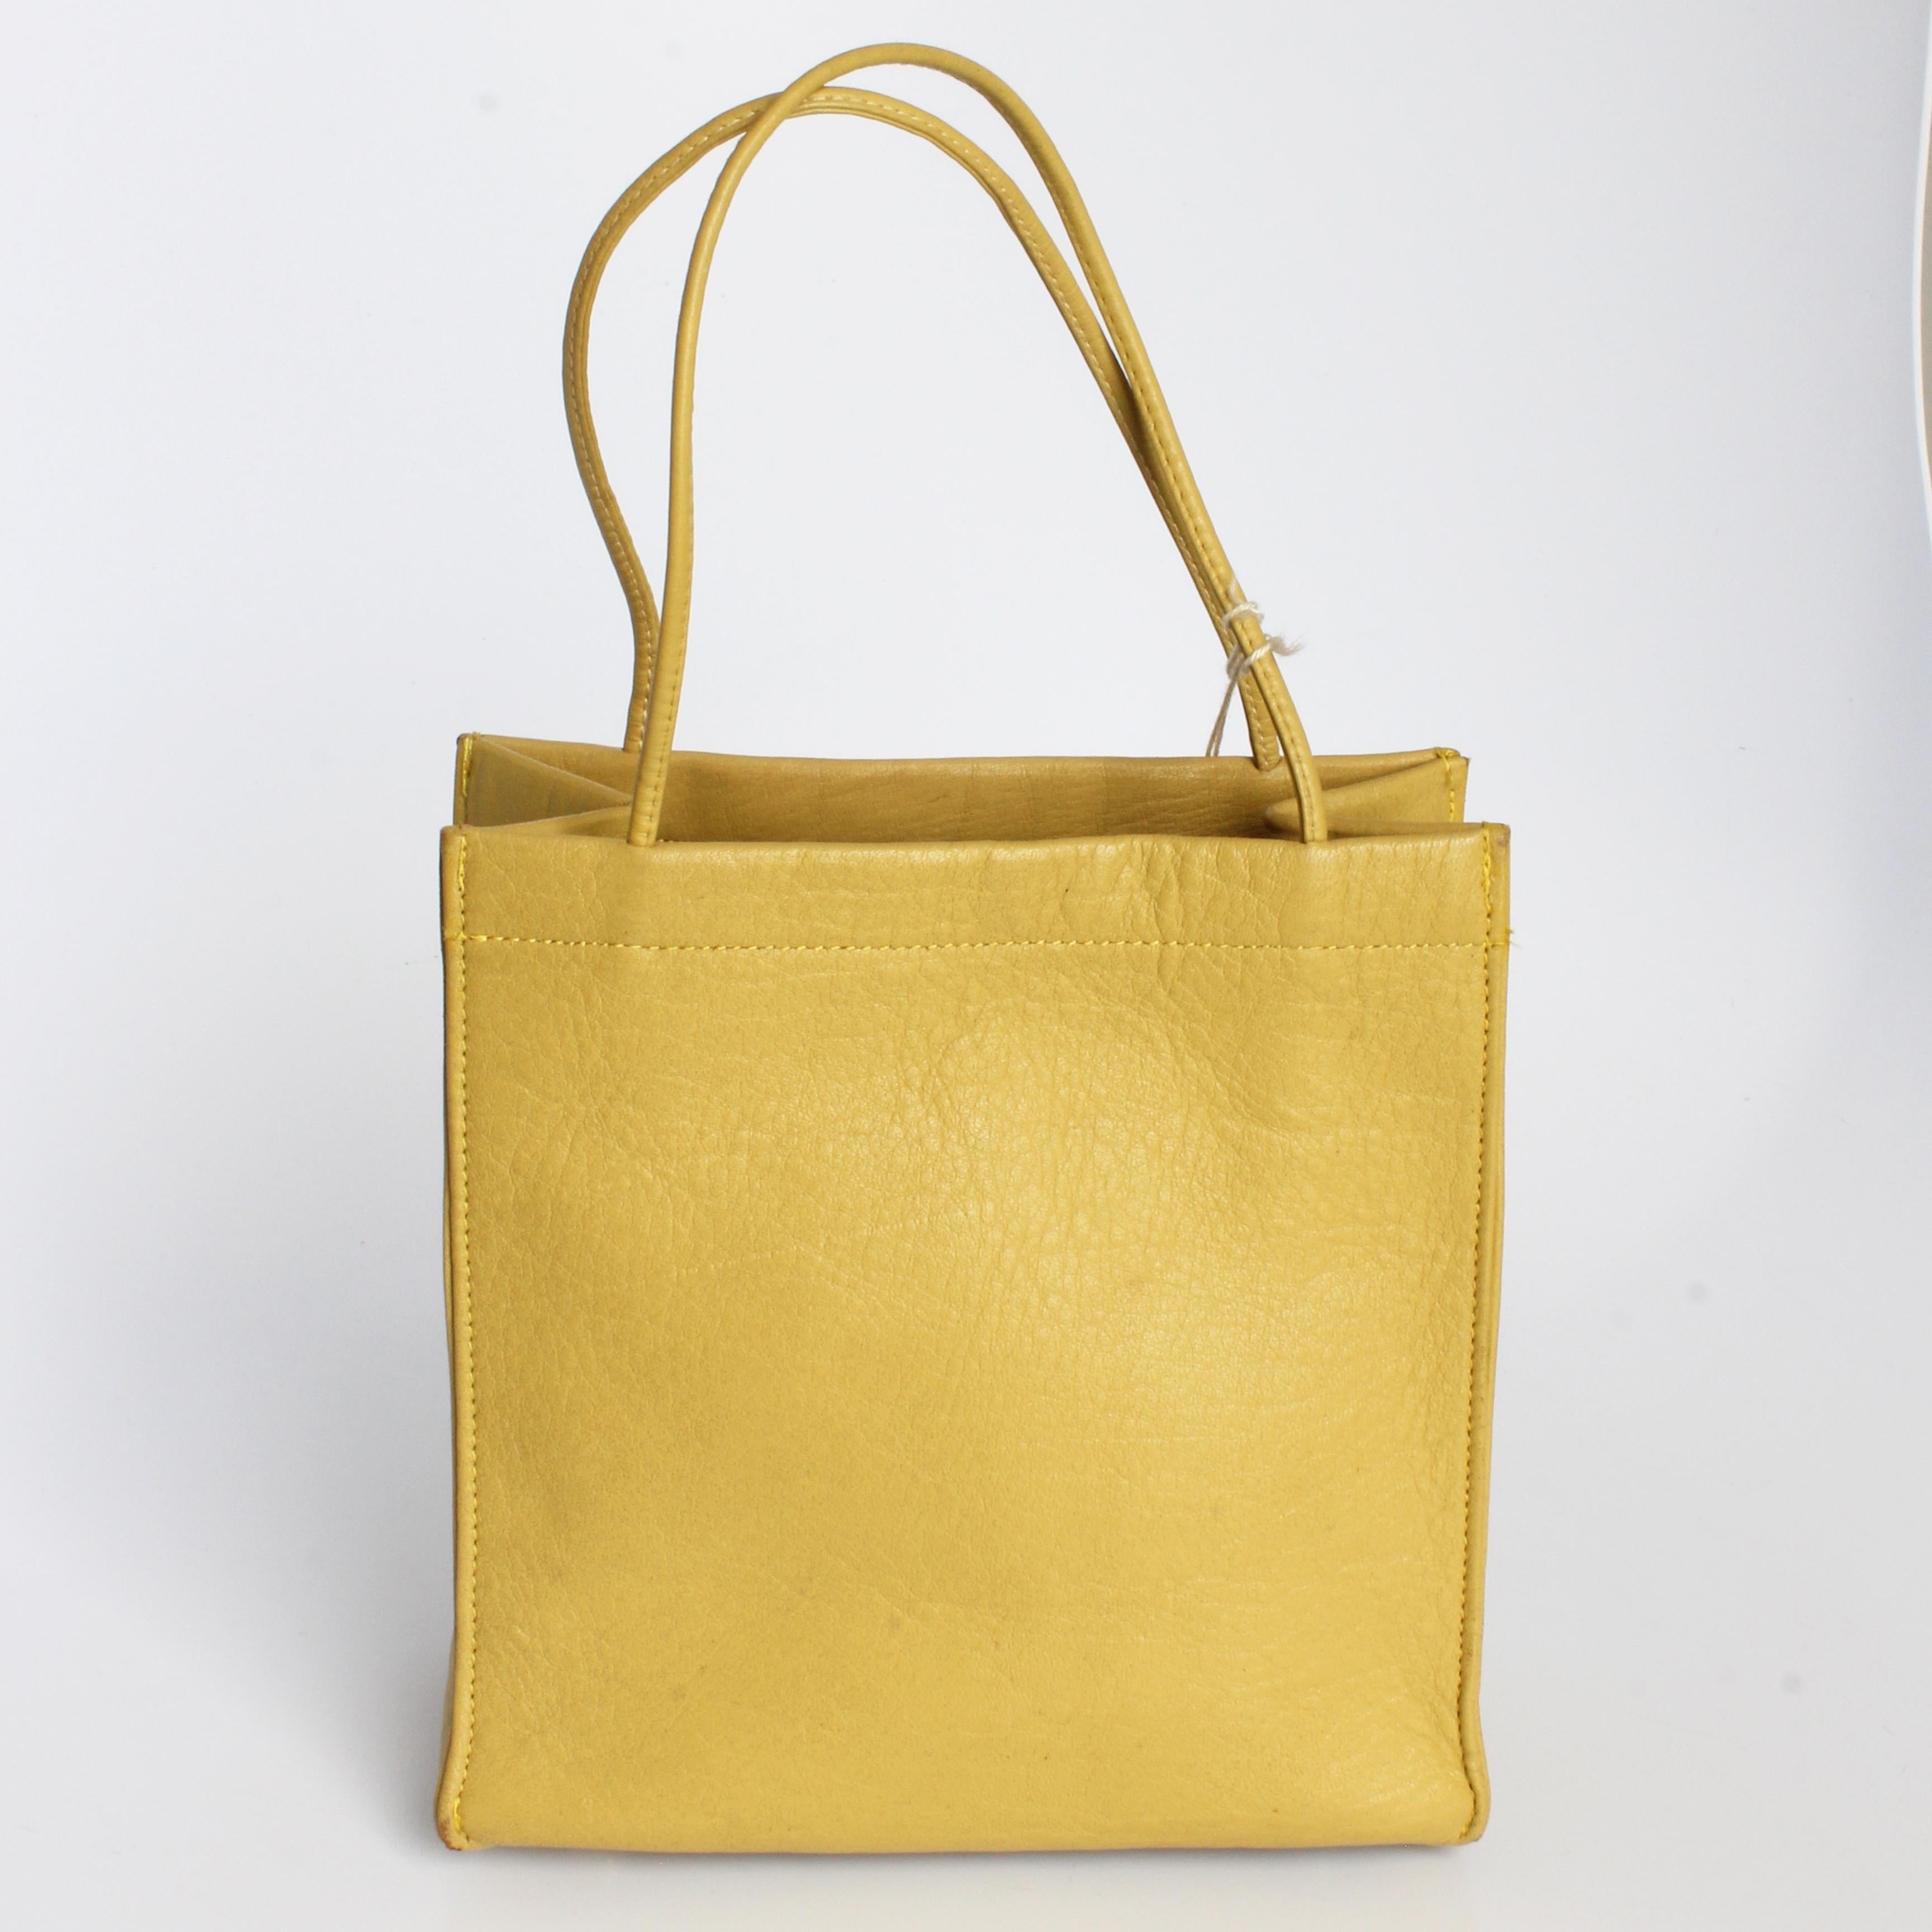 Bonnie Cashin for Coach Mini Tote Bag Mimosa Leather 1960s Vintage Rare For Sale 3